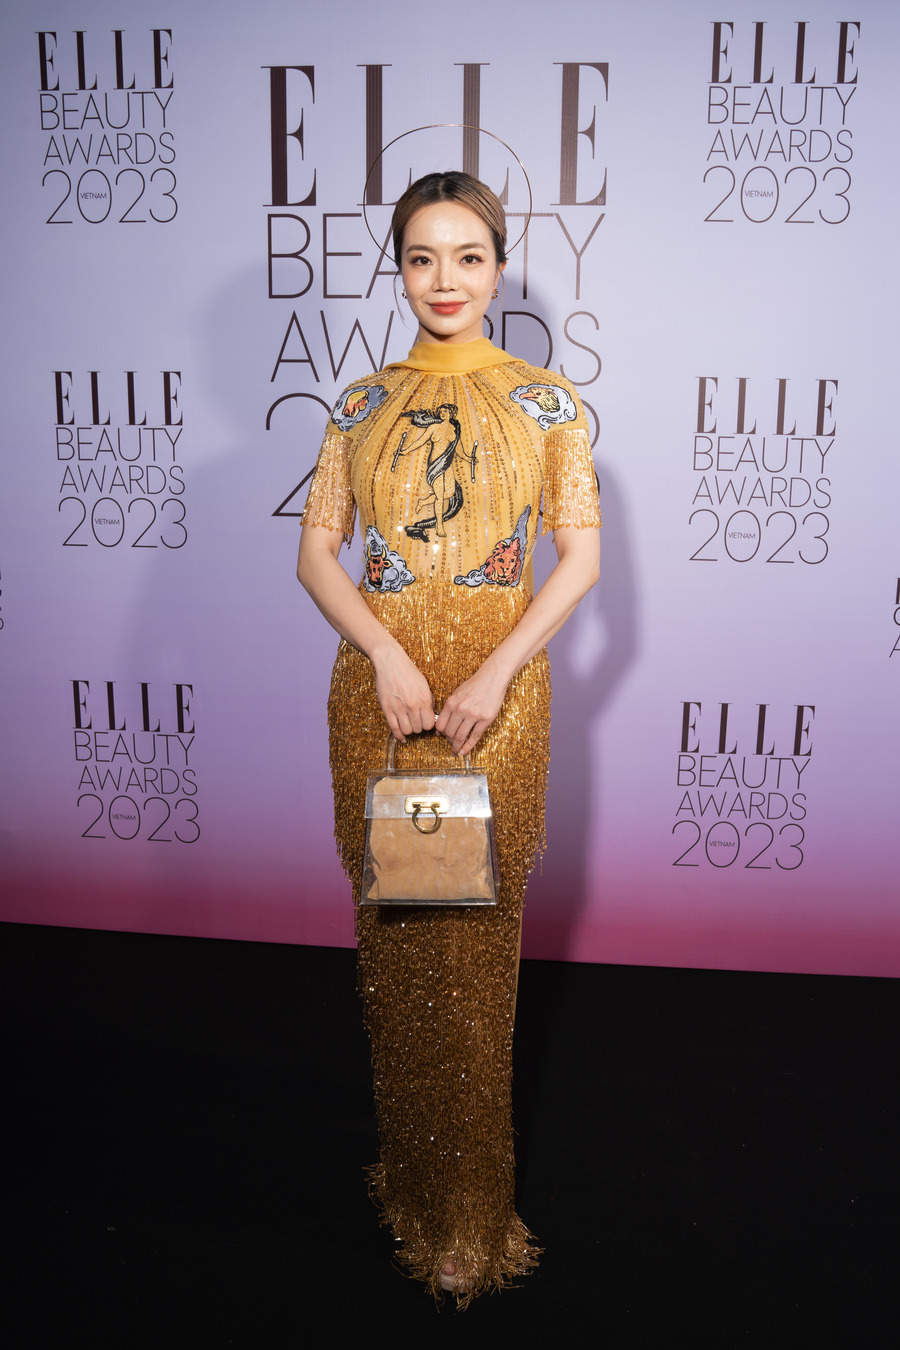 ELLE Beauty Awards 2023 - ● Beauty blogger Emmi